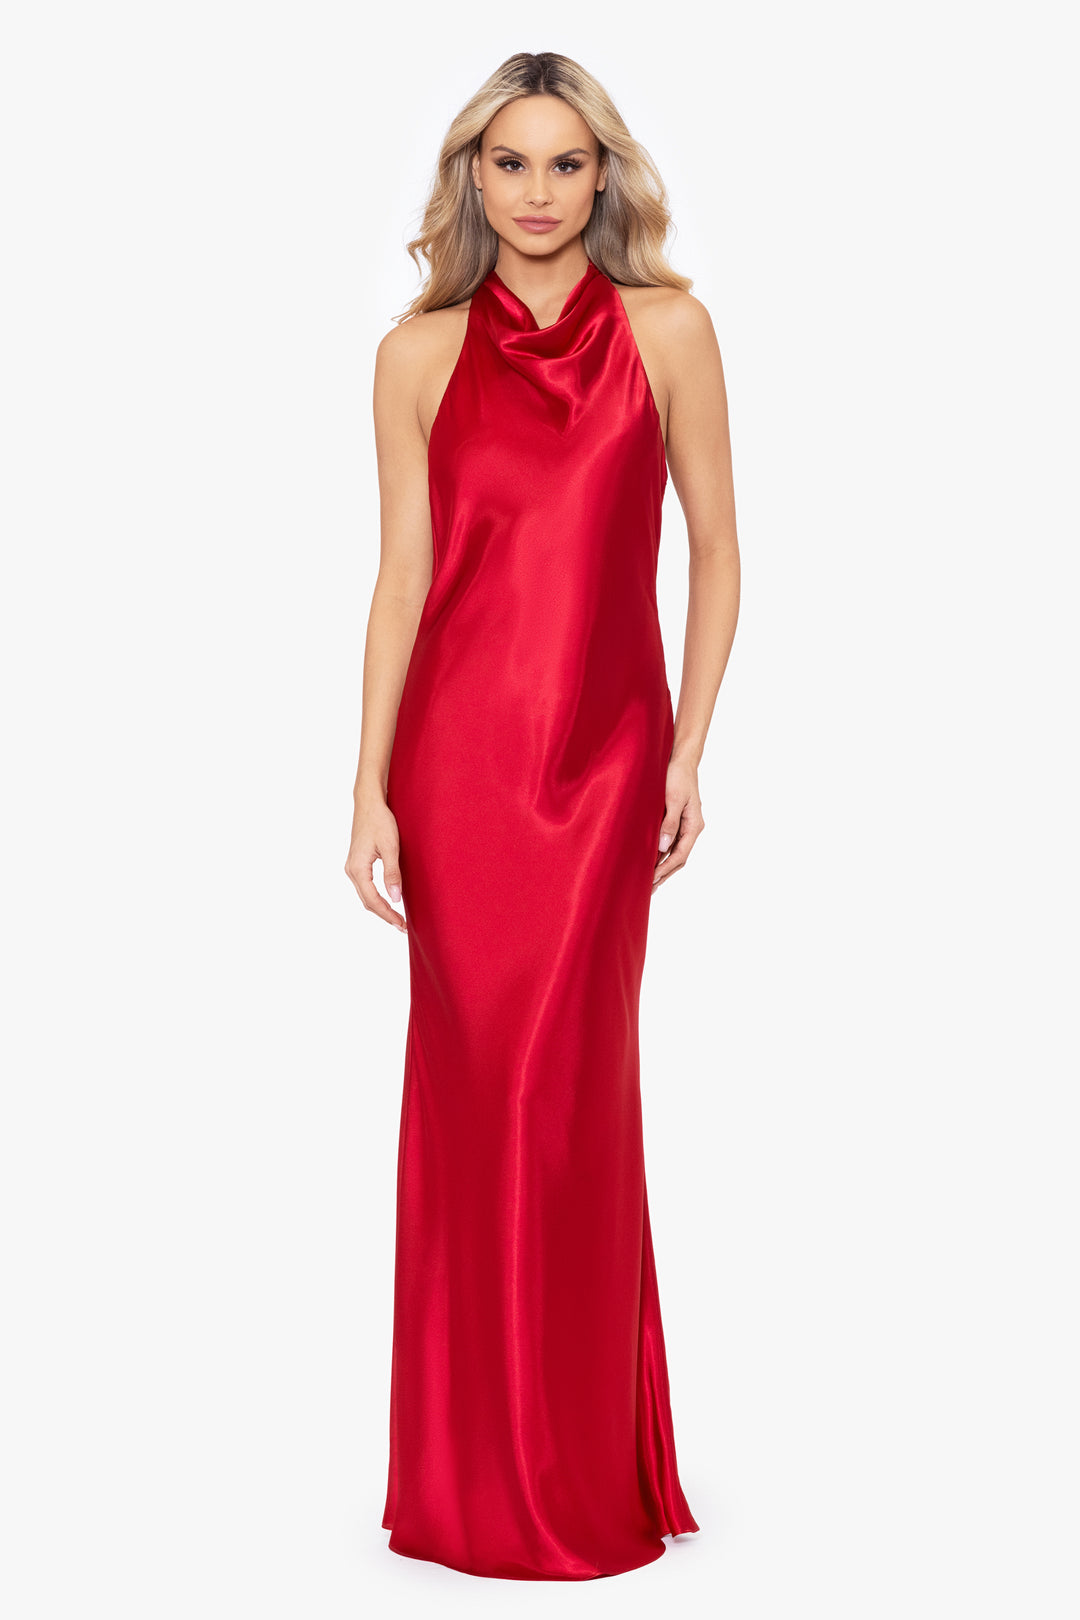 $460 B & Adam Womens Red Ruffled One Shoulder Trumpet Scuba Gown Dress  4